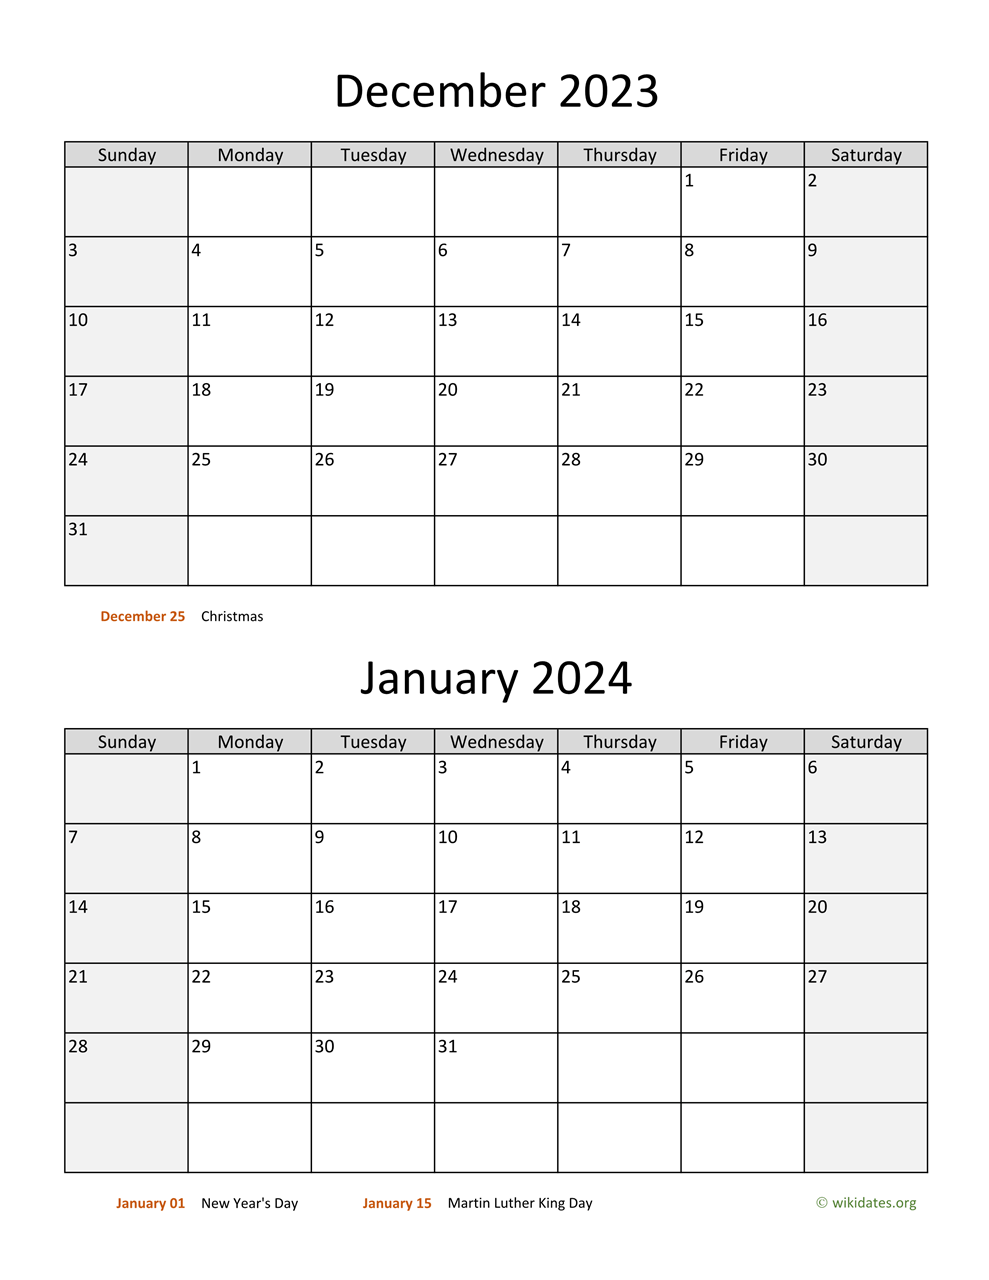 december-2023-and-january-2024-calendar-wikidates